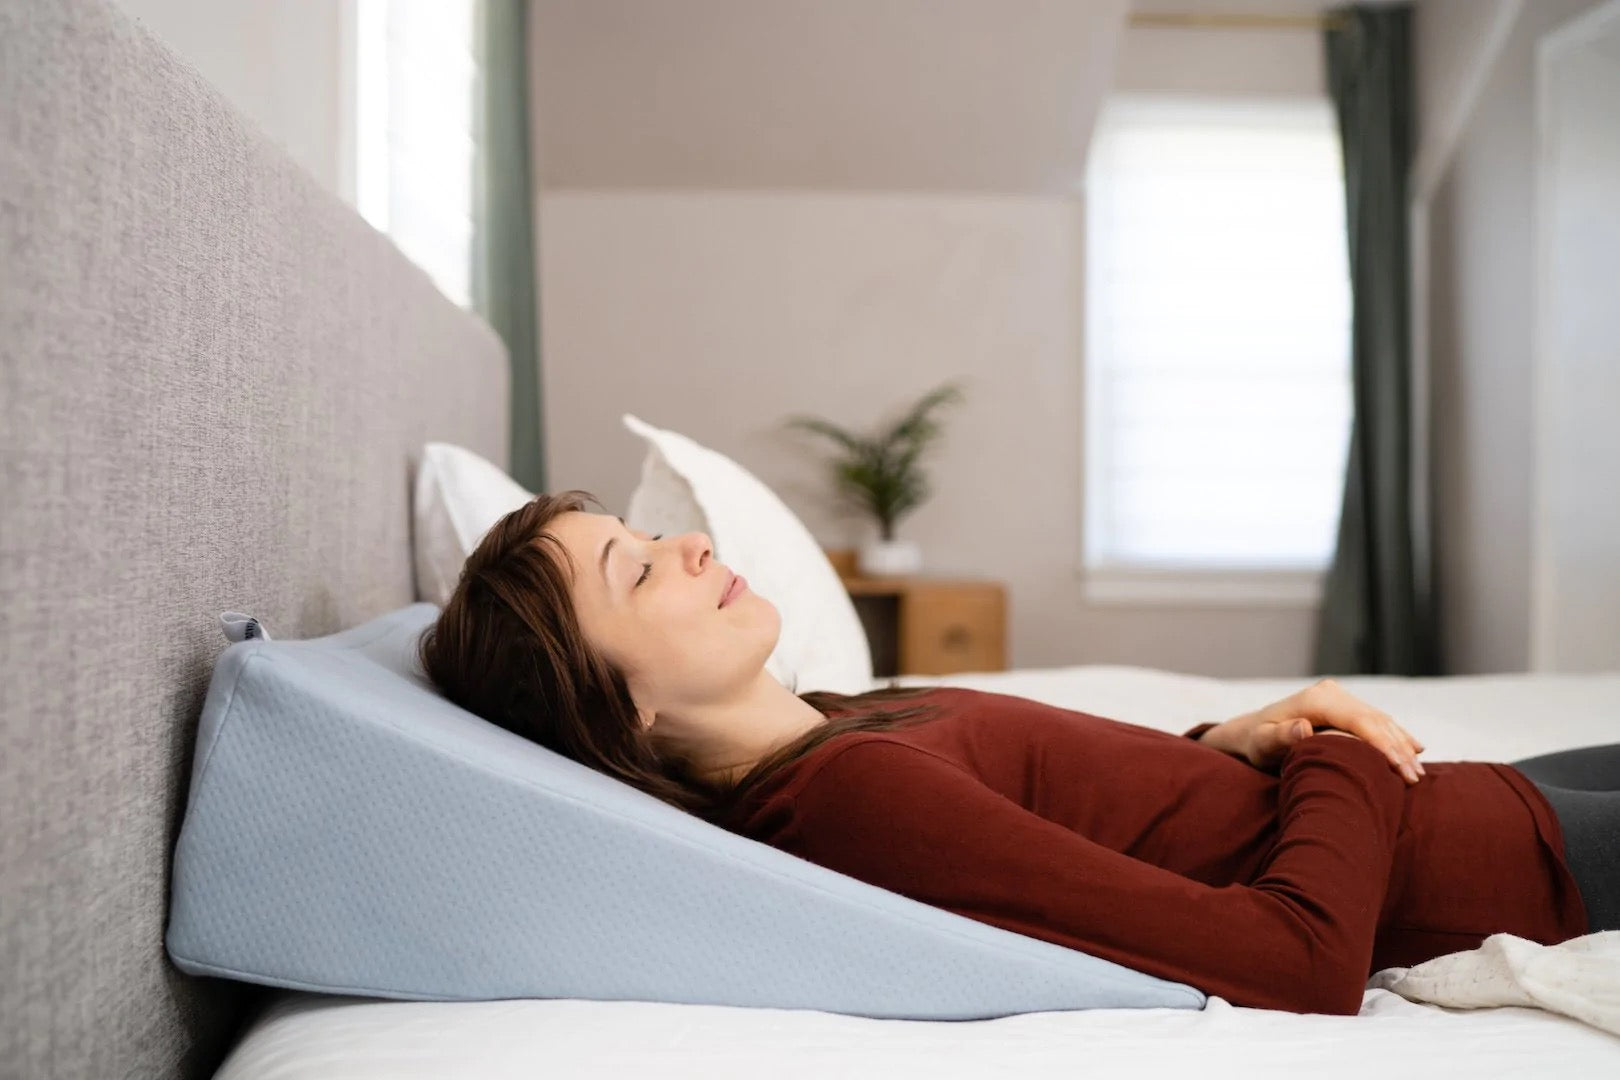 Cushy Form Wedge Pillows - 8 Inch Leg Pillows for Sleeping, Post